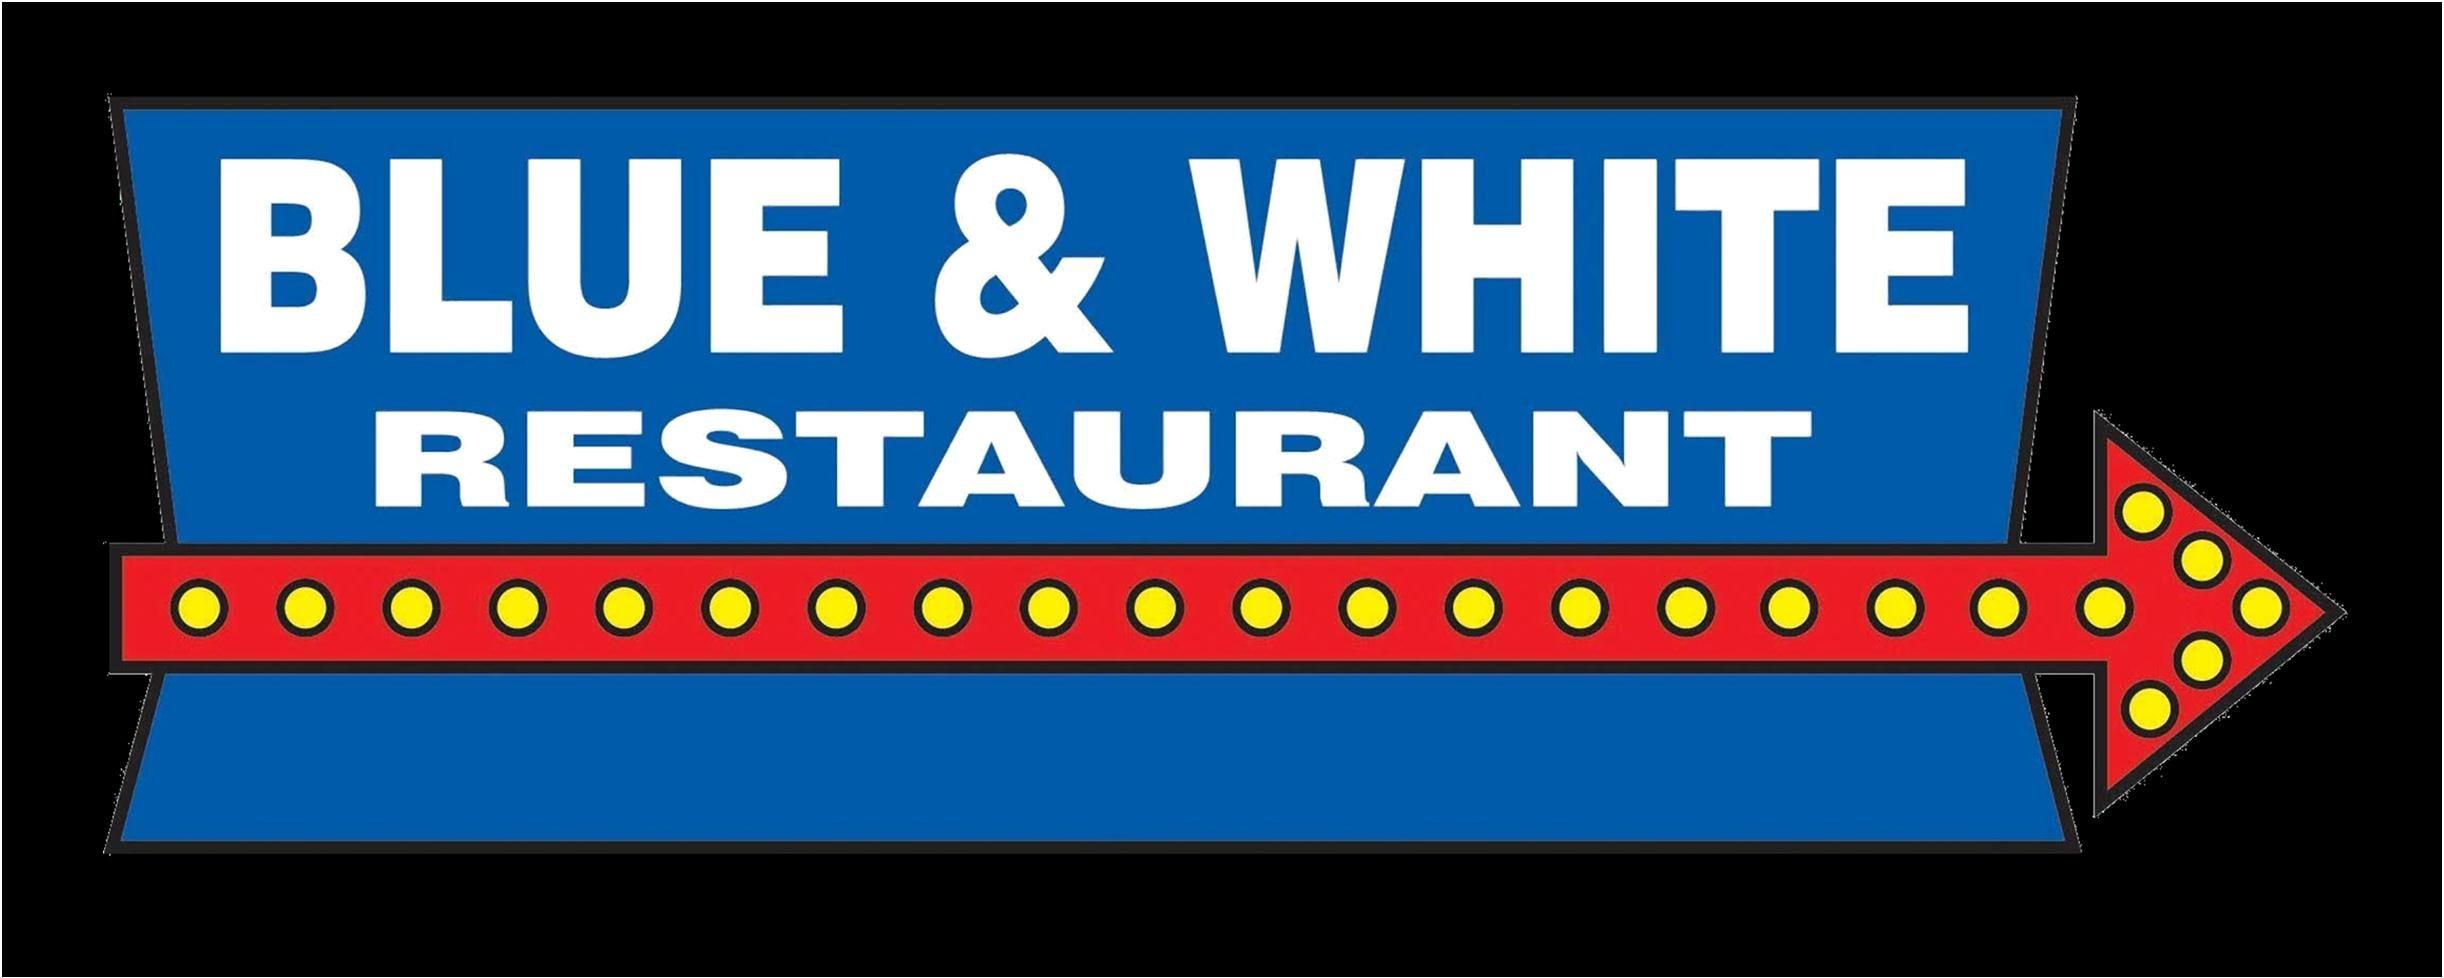 Blue and White Restaurant Logo - Blue and White Restaurant ... Established Since 1924